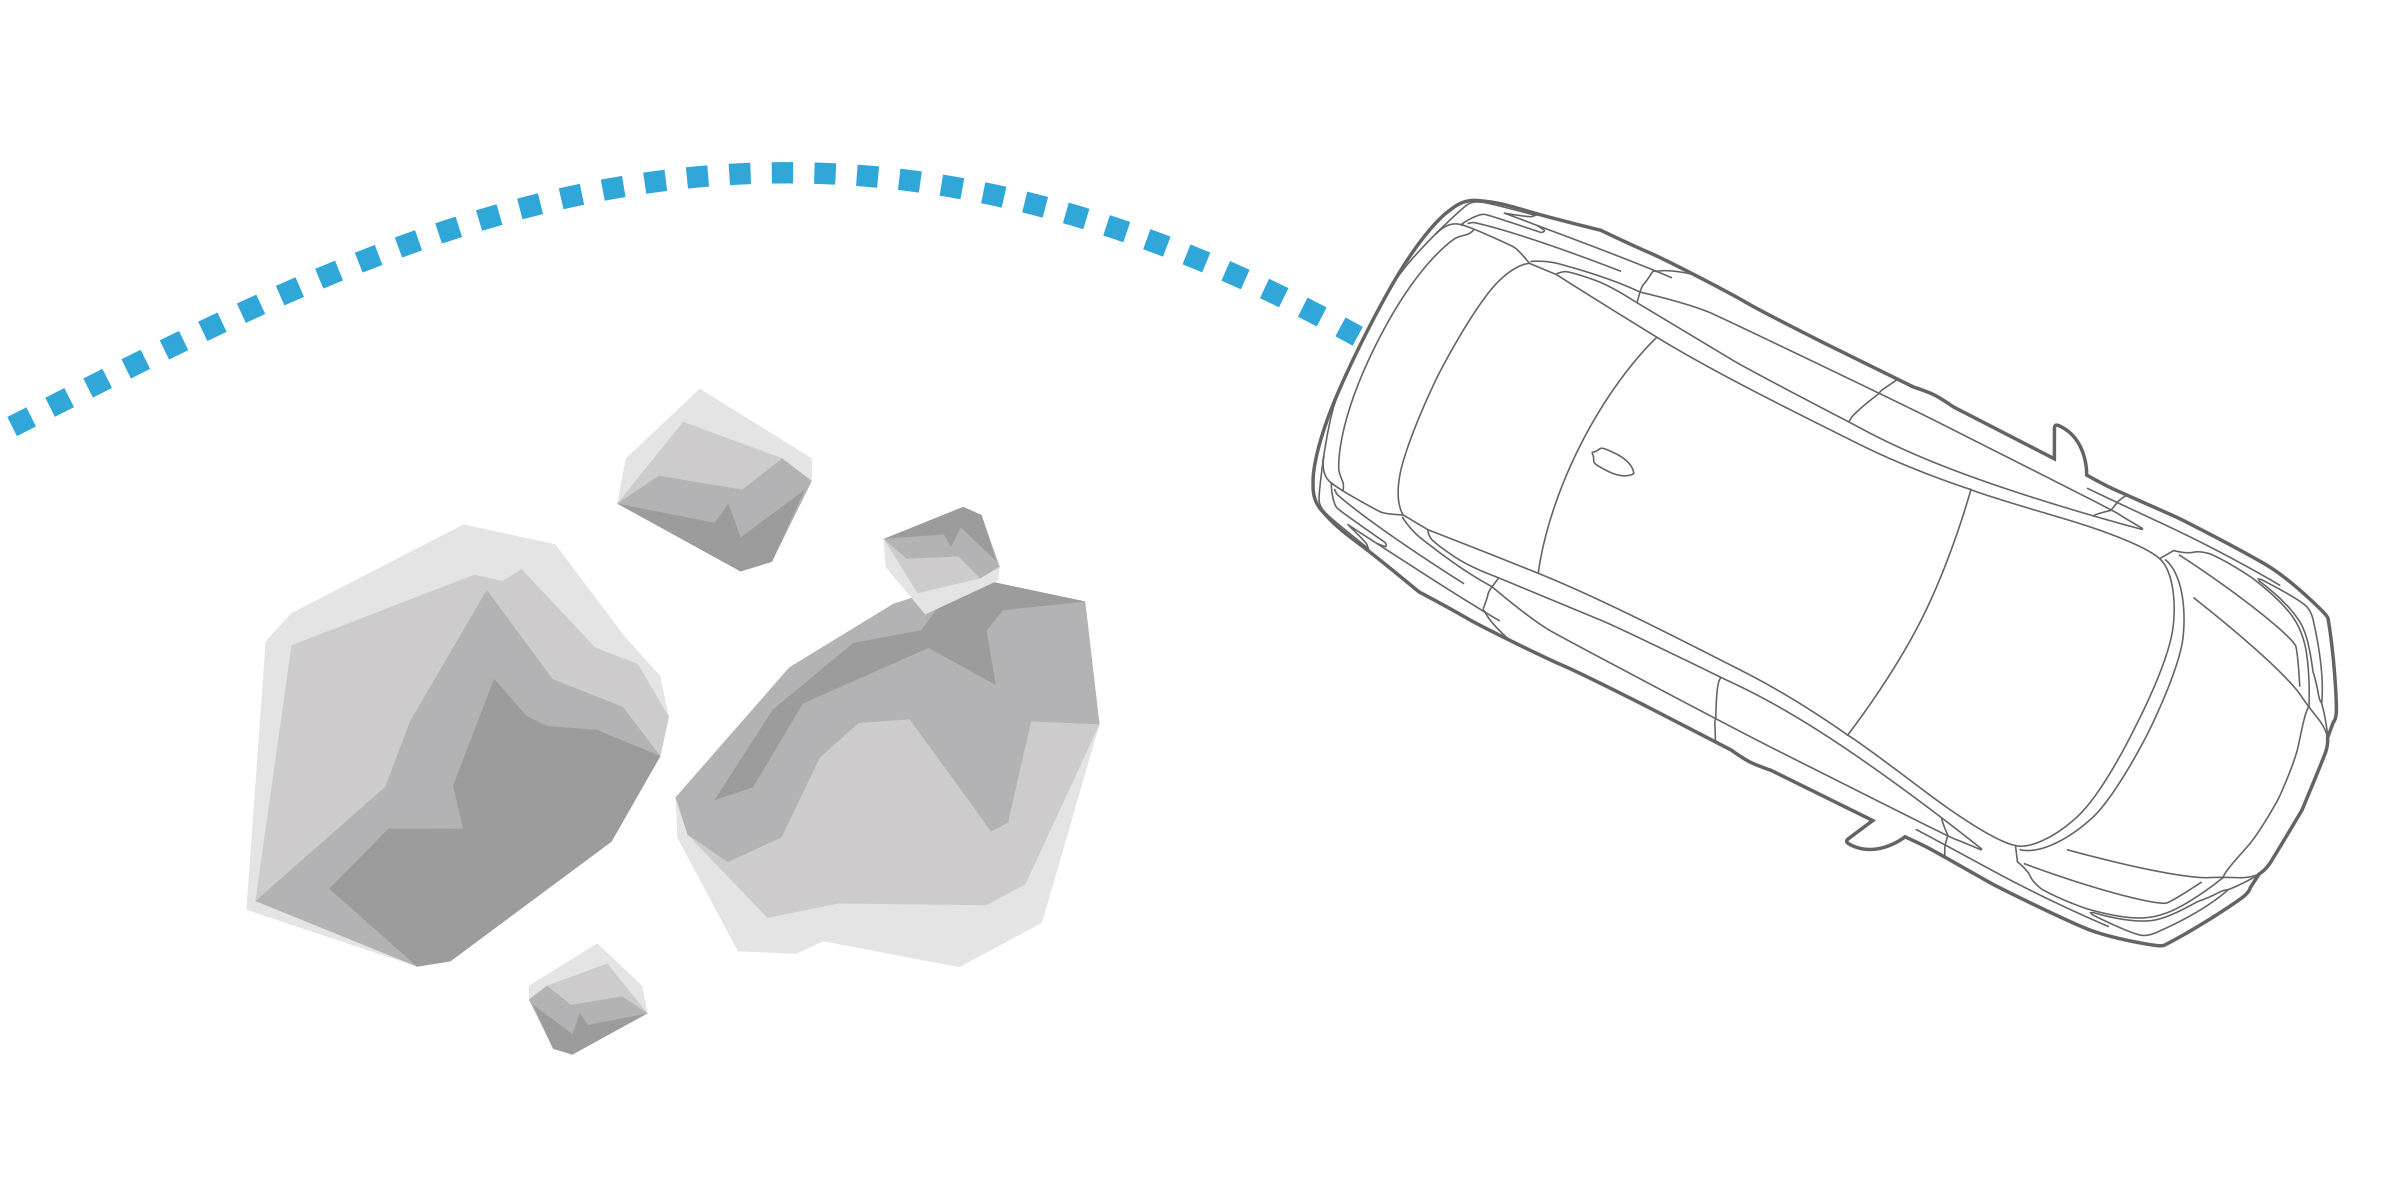 Nissan SUNNY ANTI-LOCK BRAKING SYSTEM illustration of vehicle steering around large rocks in the road